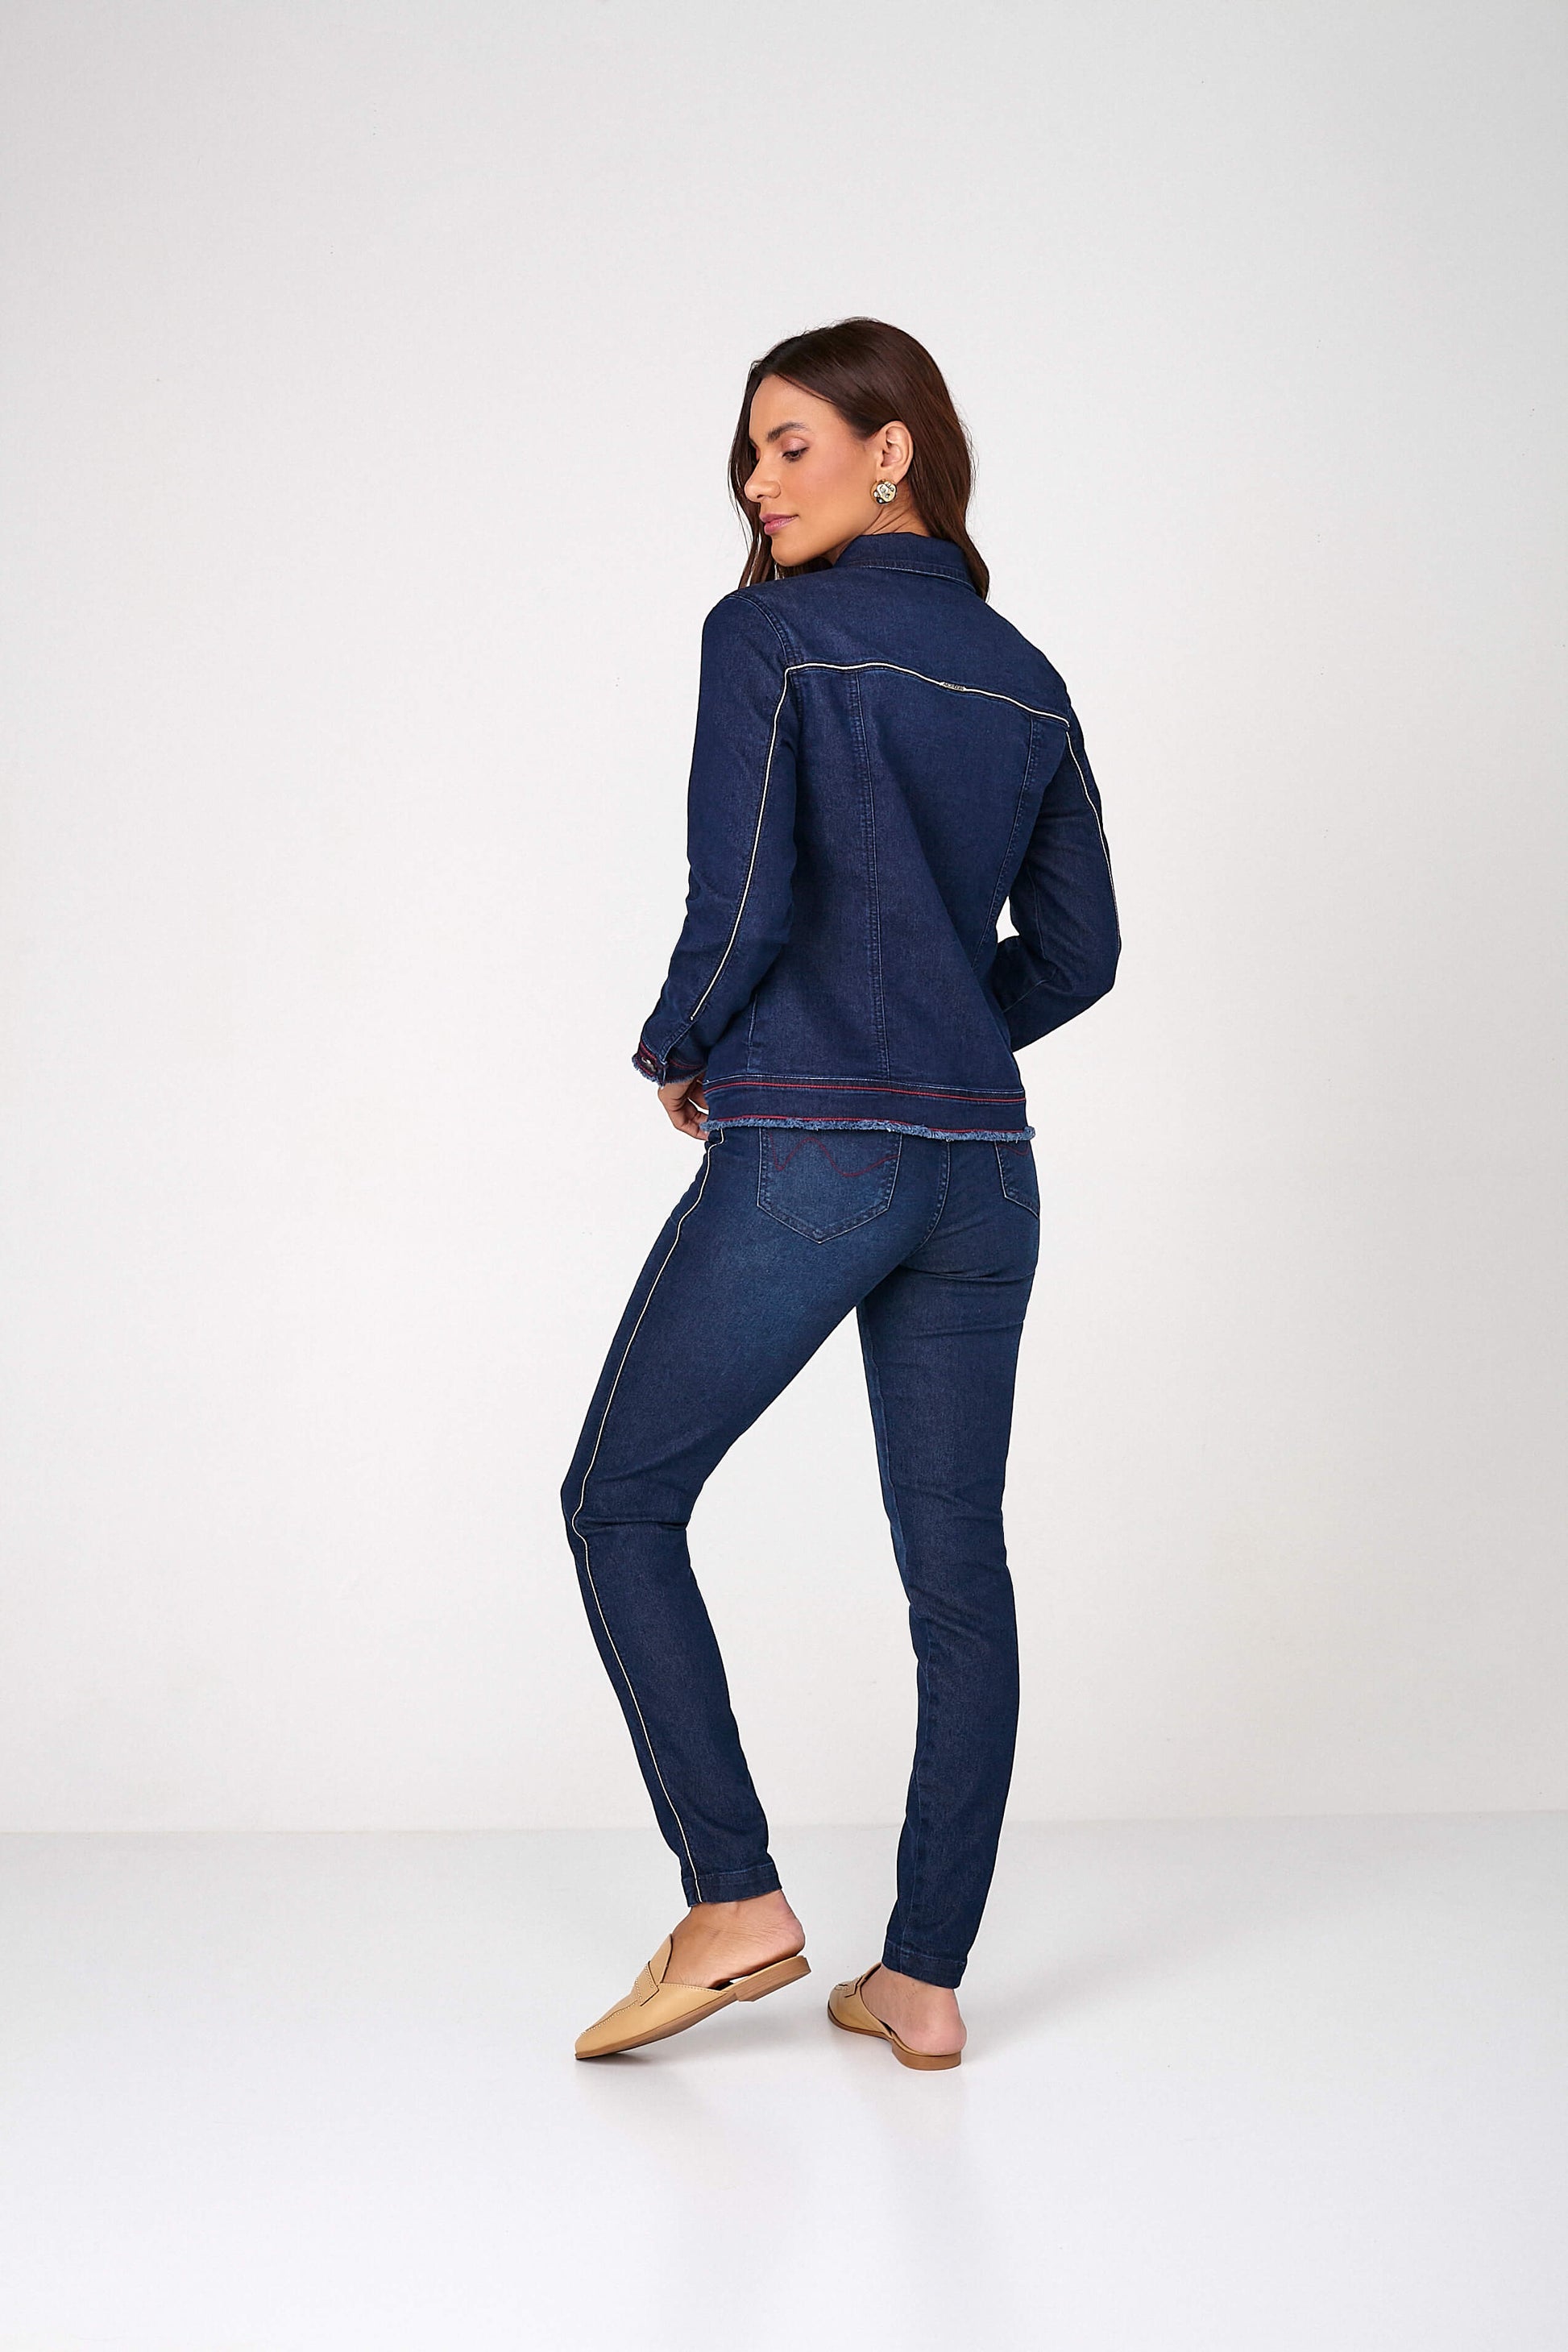 jaqueta jeans tradicional navy – Scalon